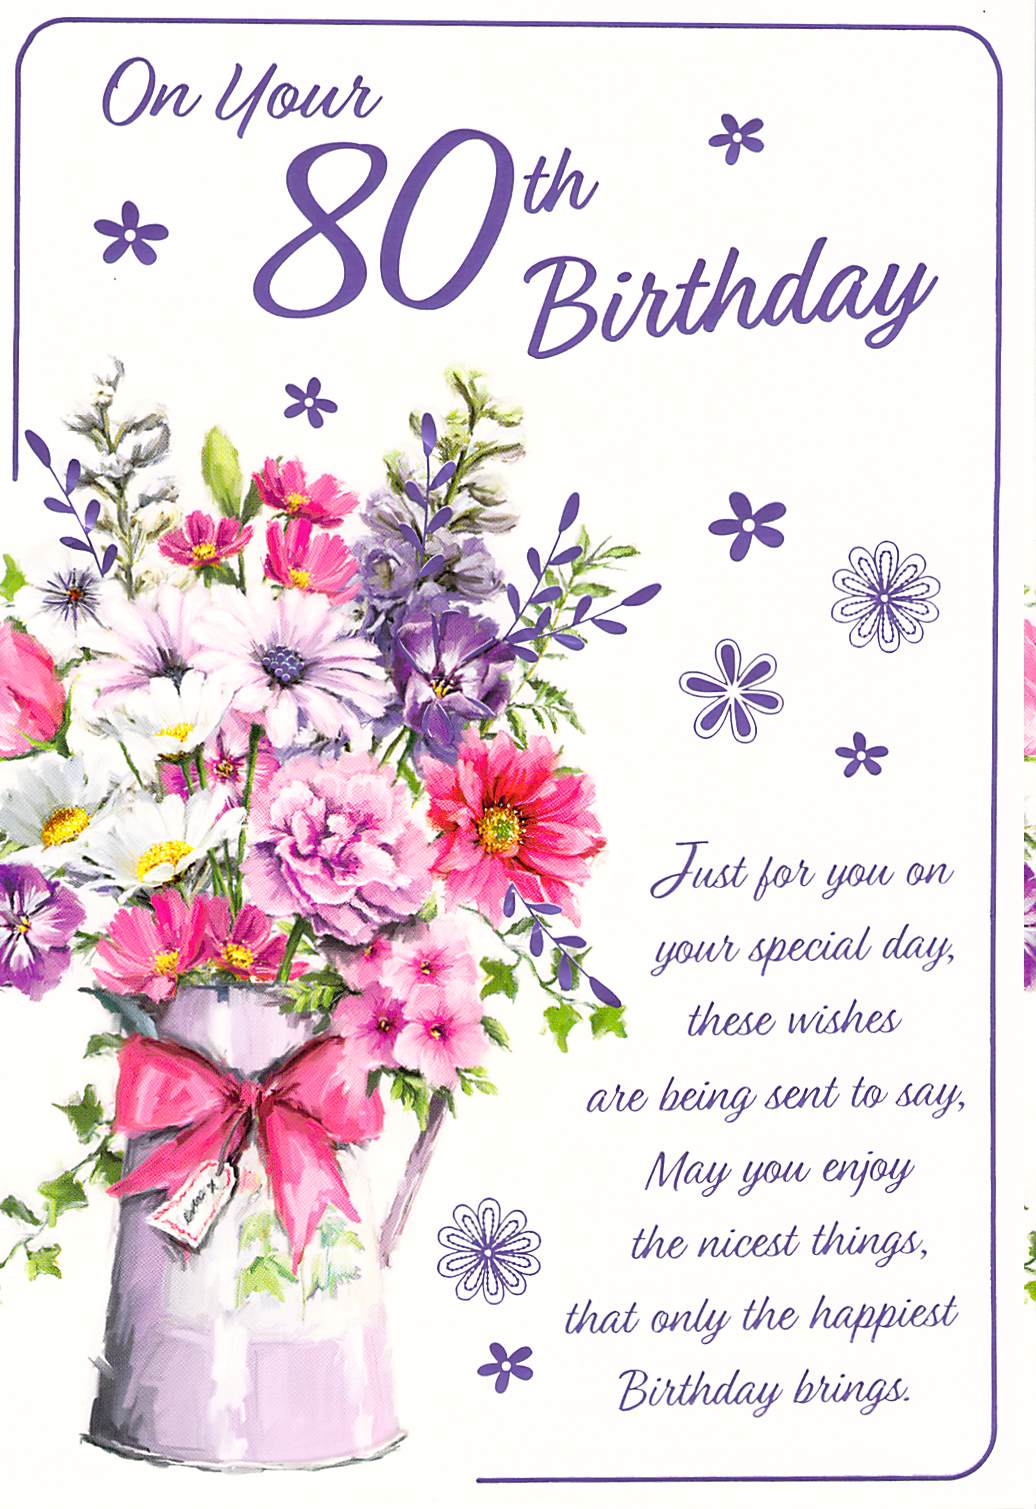 Birthday (Age 80) - Greeting Card - Multi Buy Discount - Free P&P